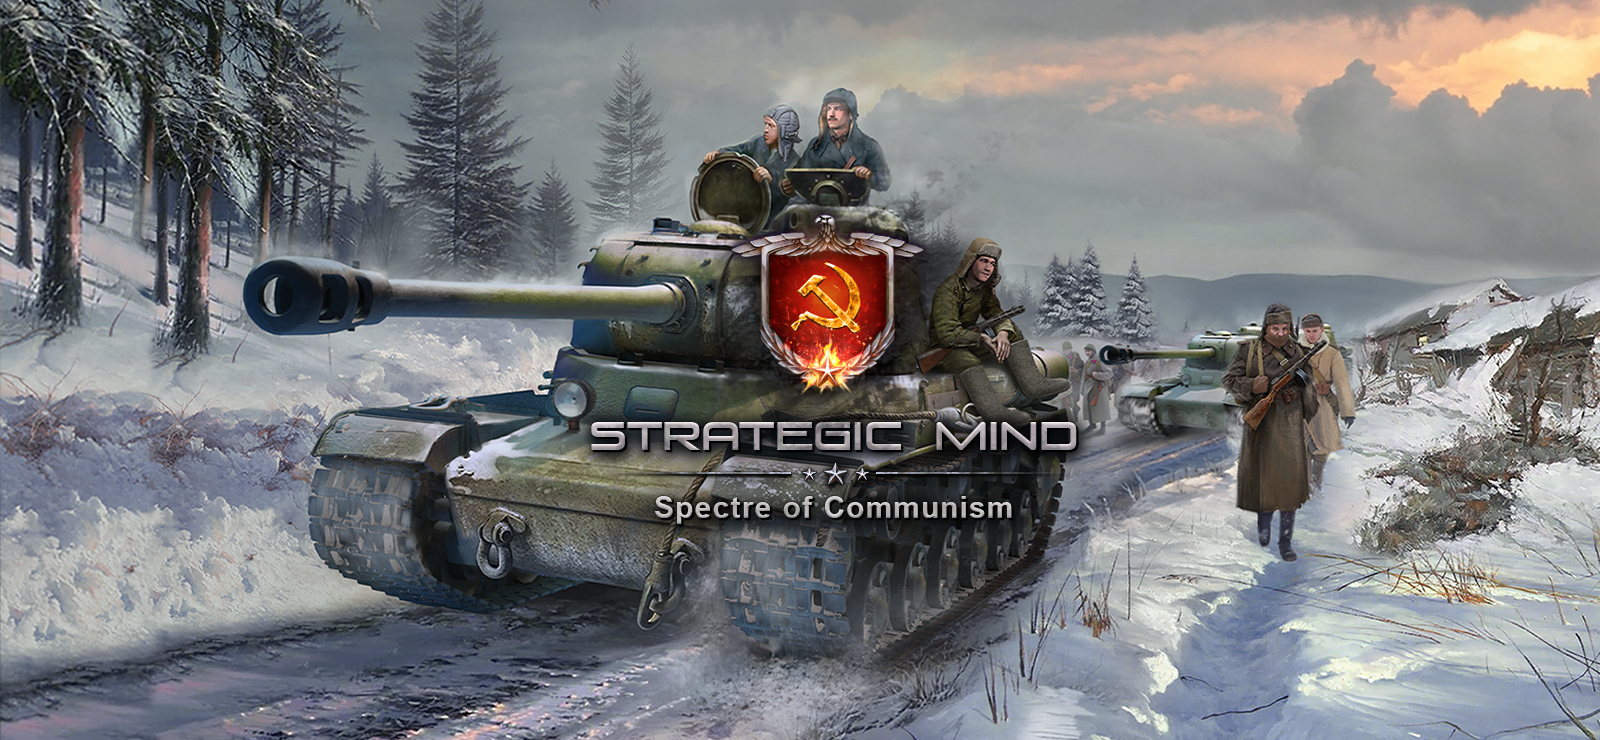 Strategic Mind: Spectre Of Communism